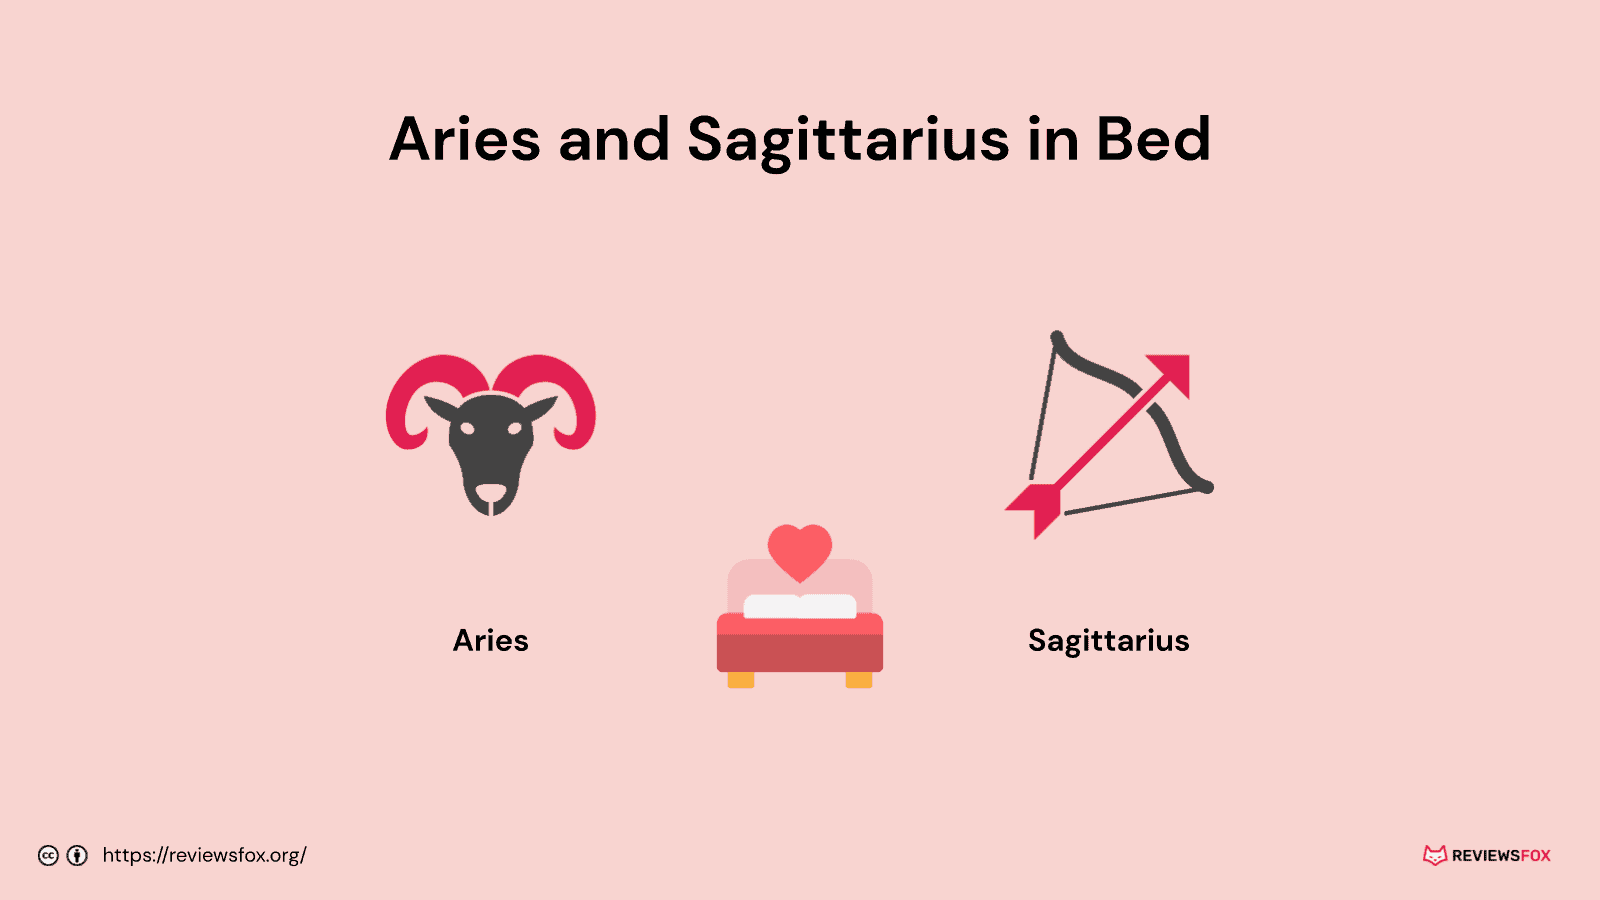 Aries and Sagittarius in bed